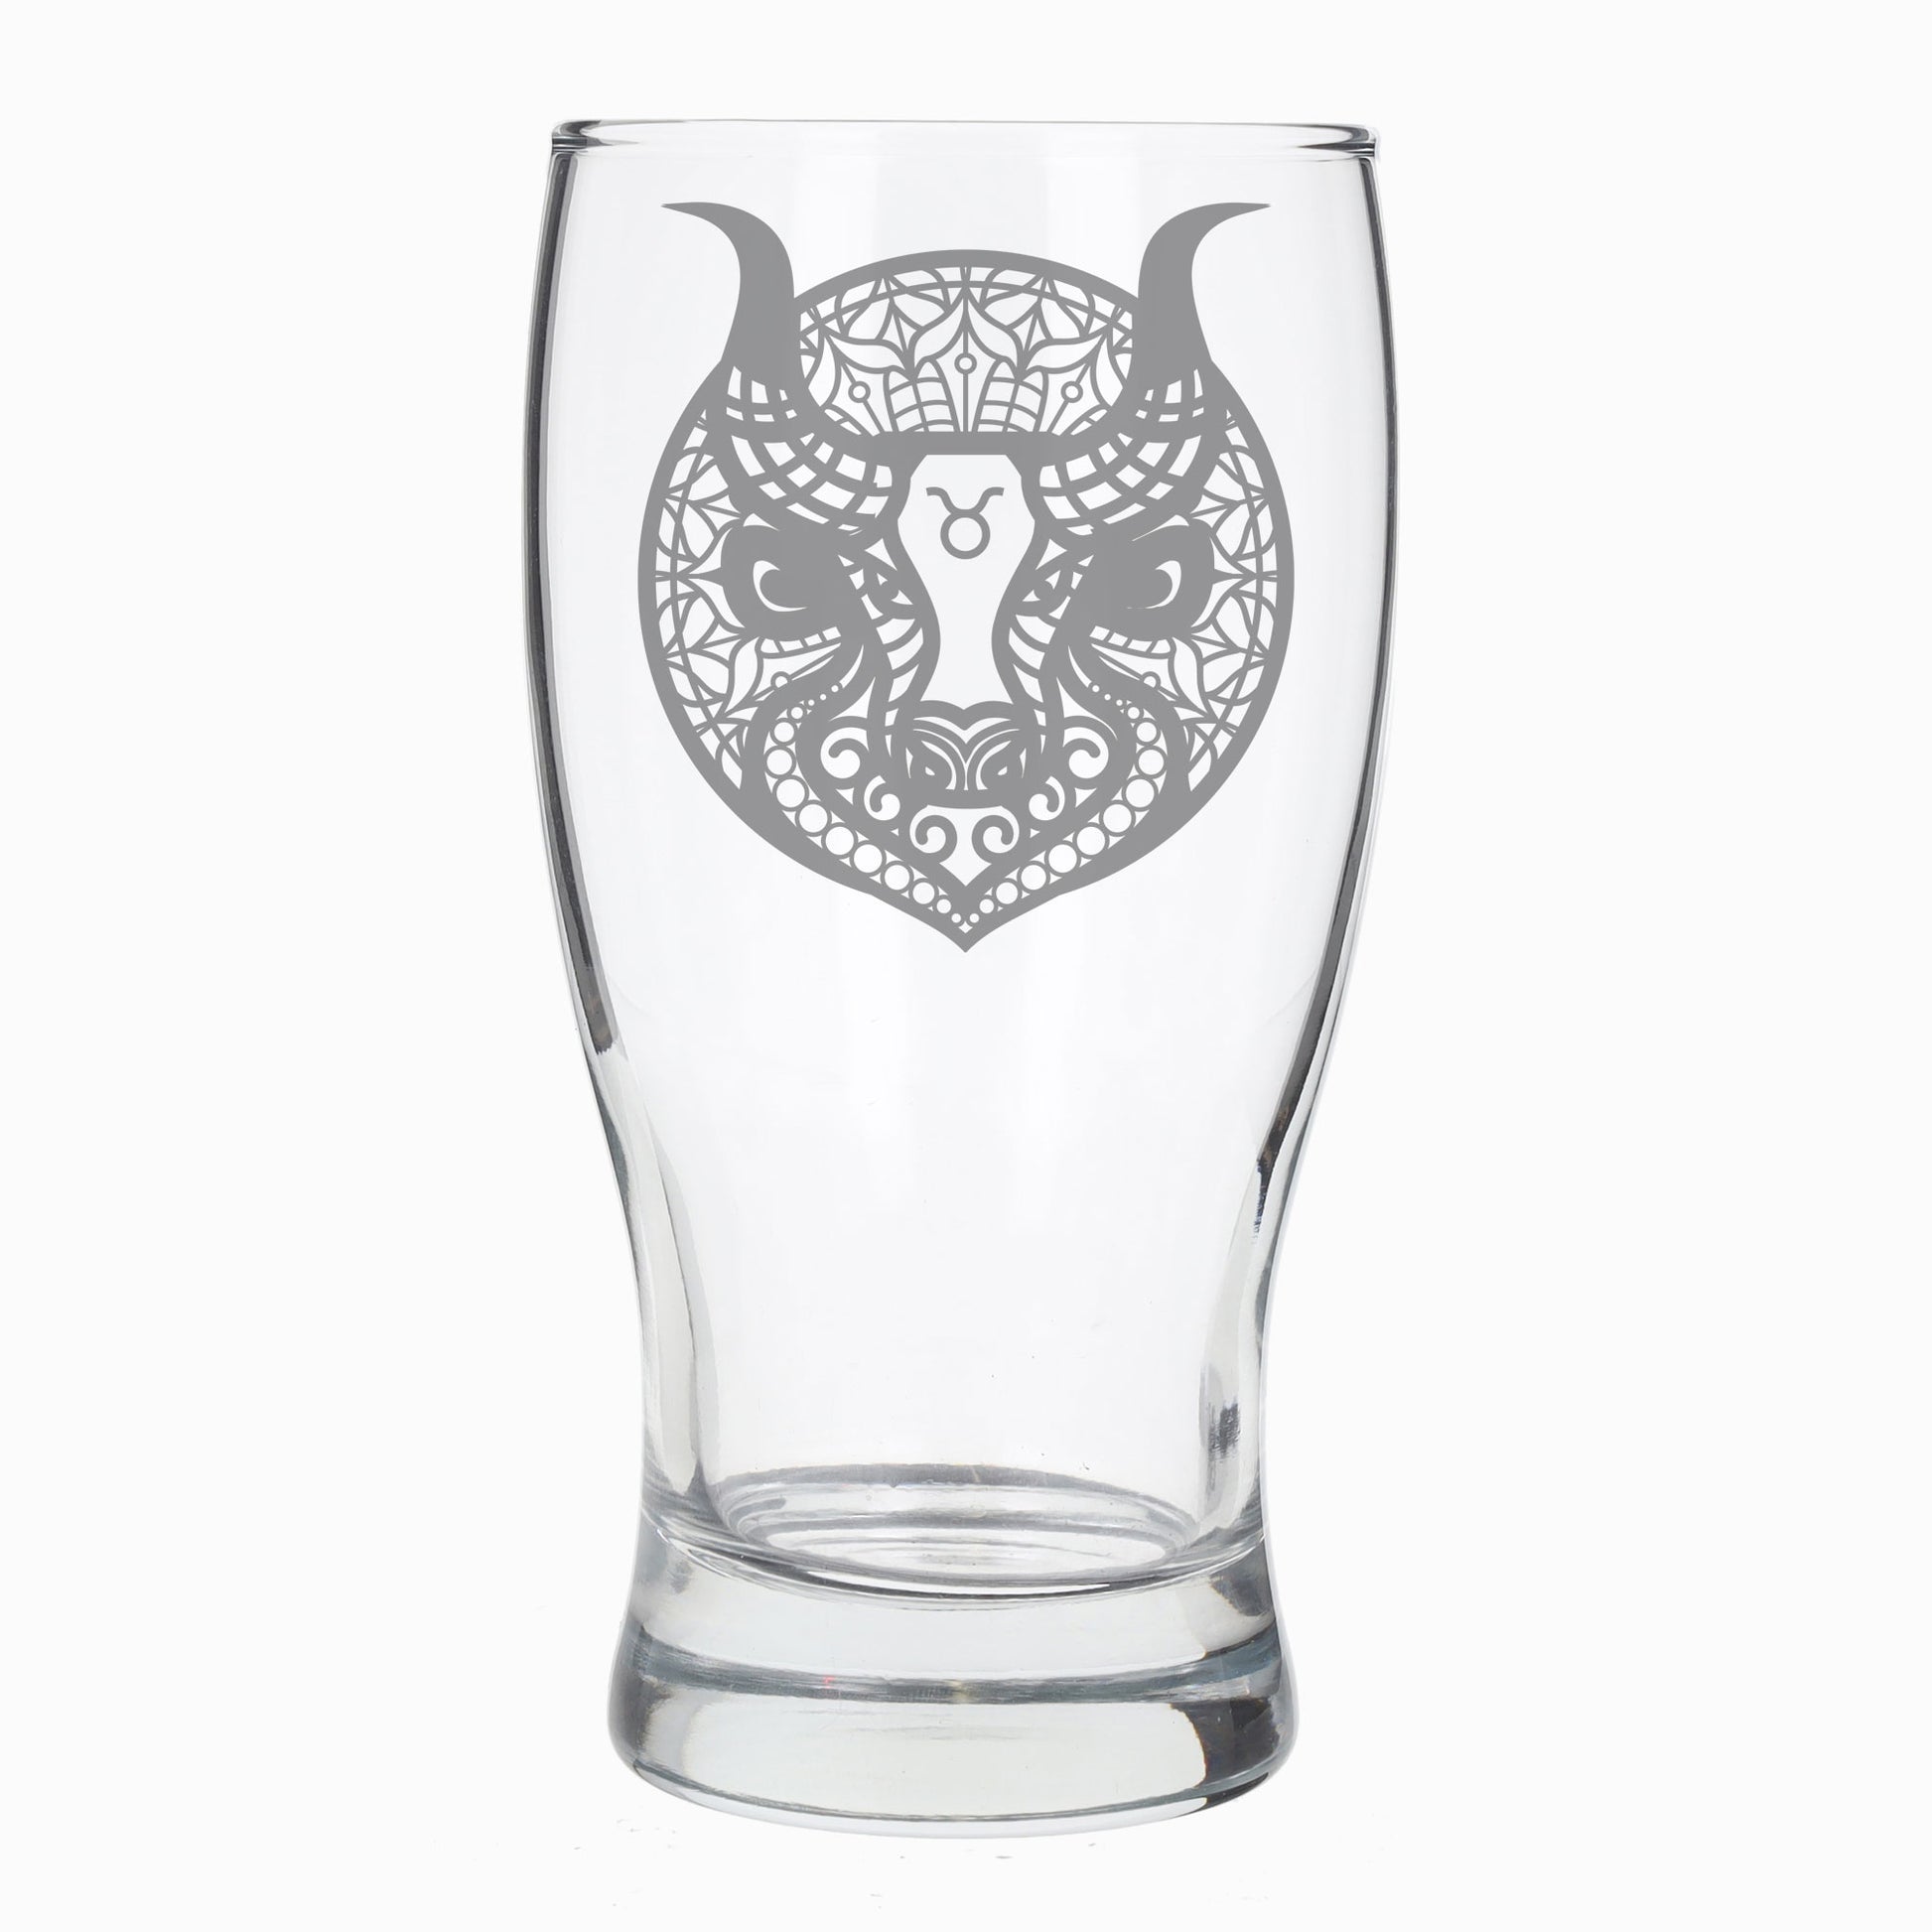 Taurus Zodiac Engraved Pint Glass  - Always Looking Good -   